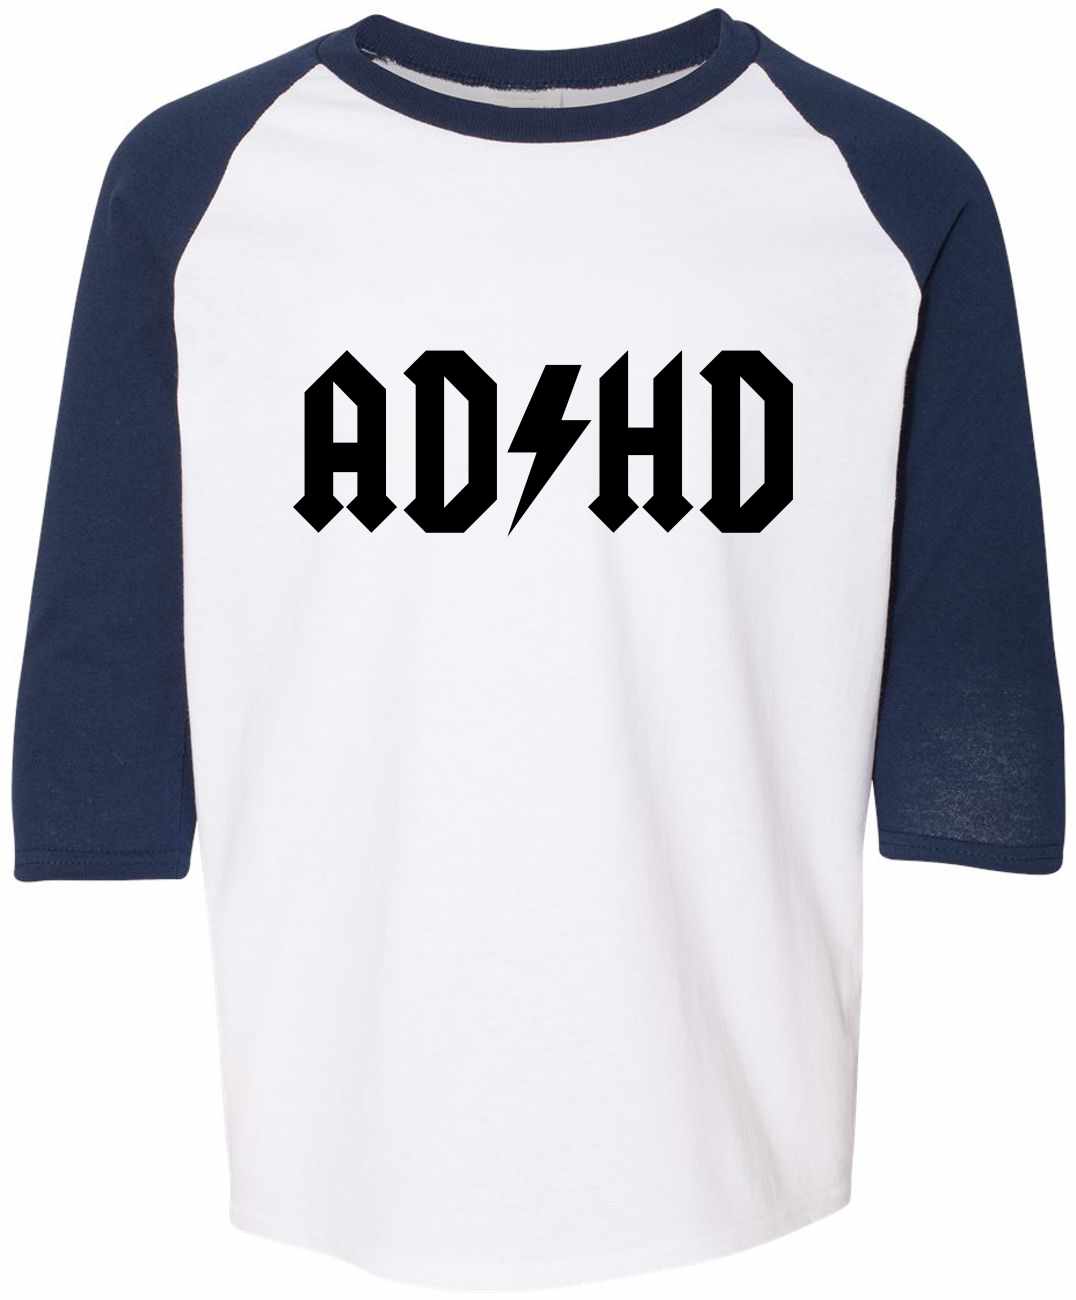 ADHD on Youth Baseball Shirt